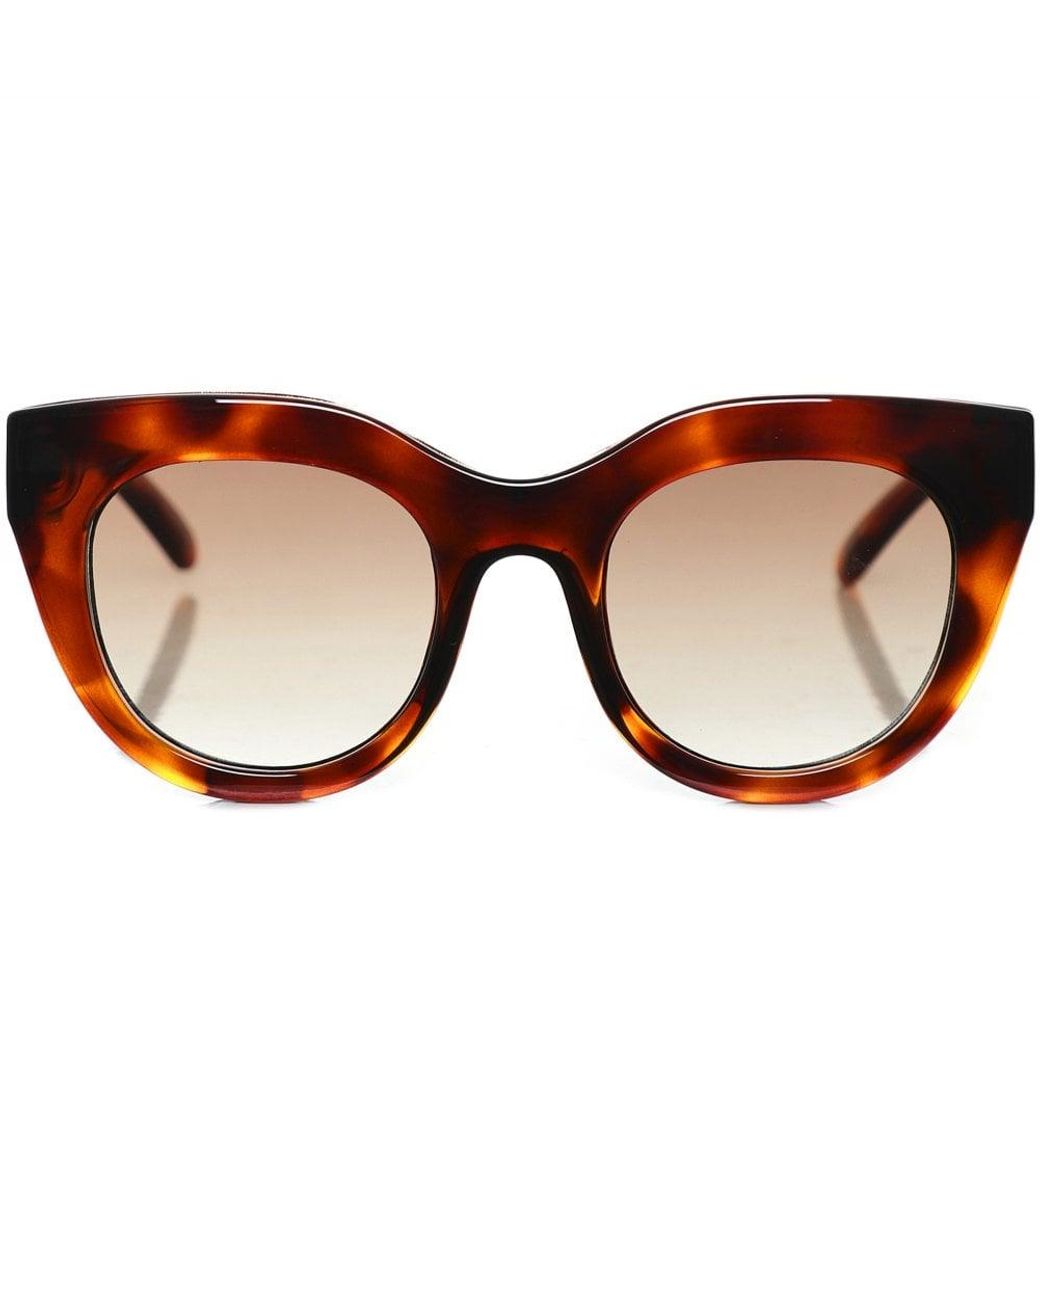 Le Specs Air Heart Sunglasses - Lyst